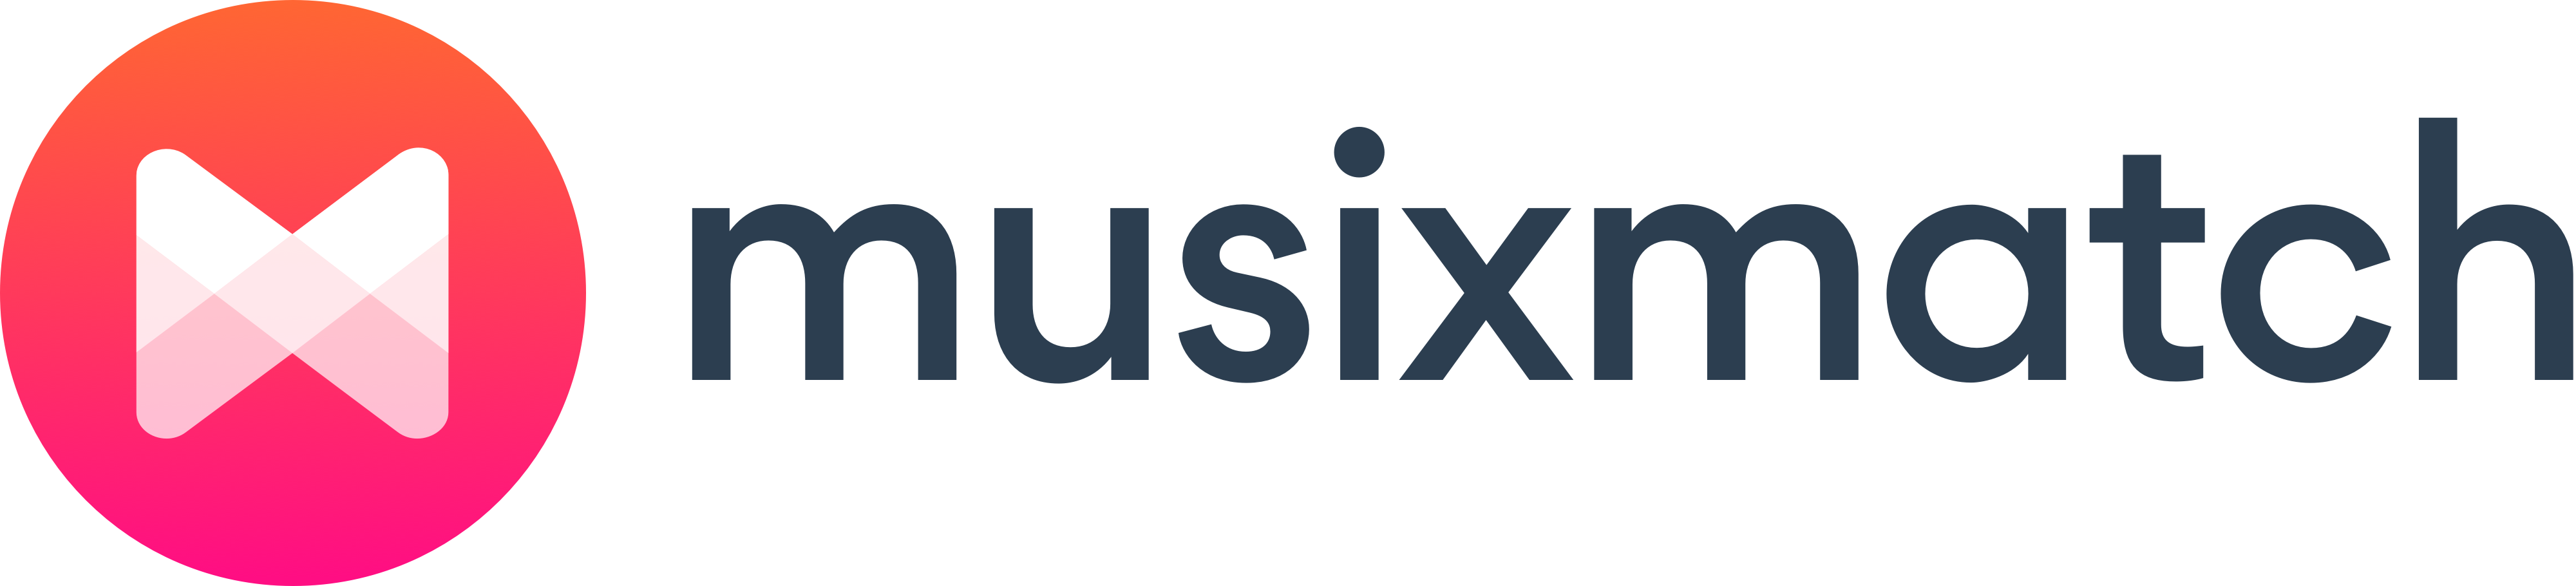 Logo musixmatch